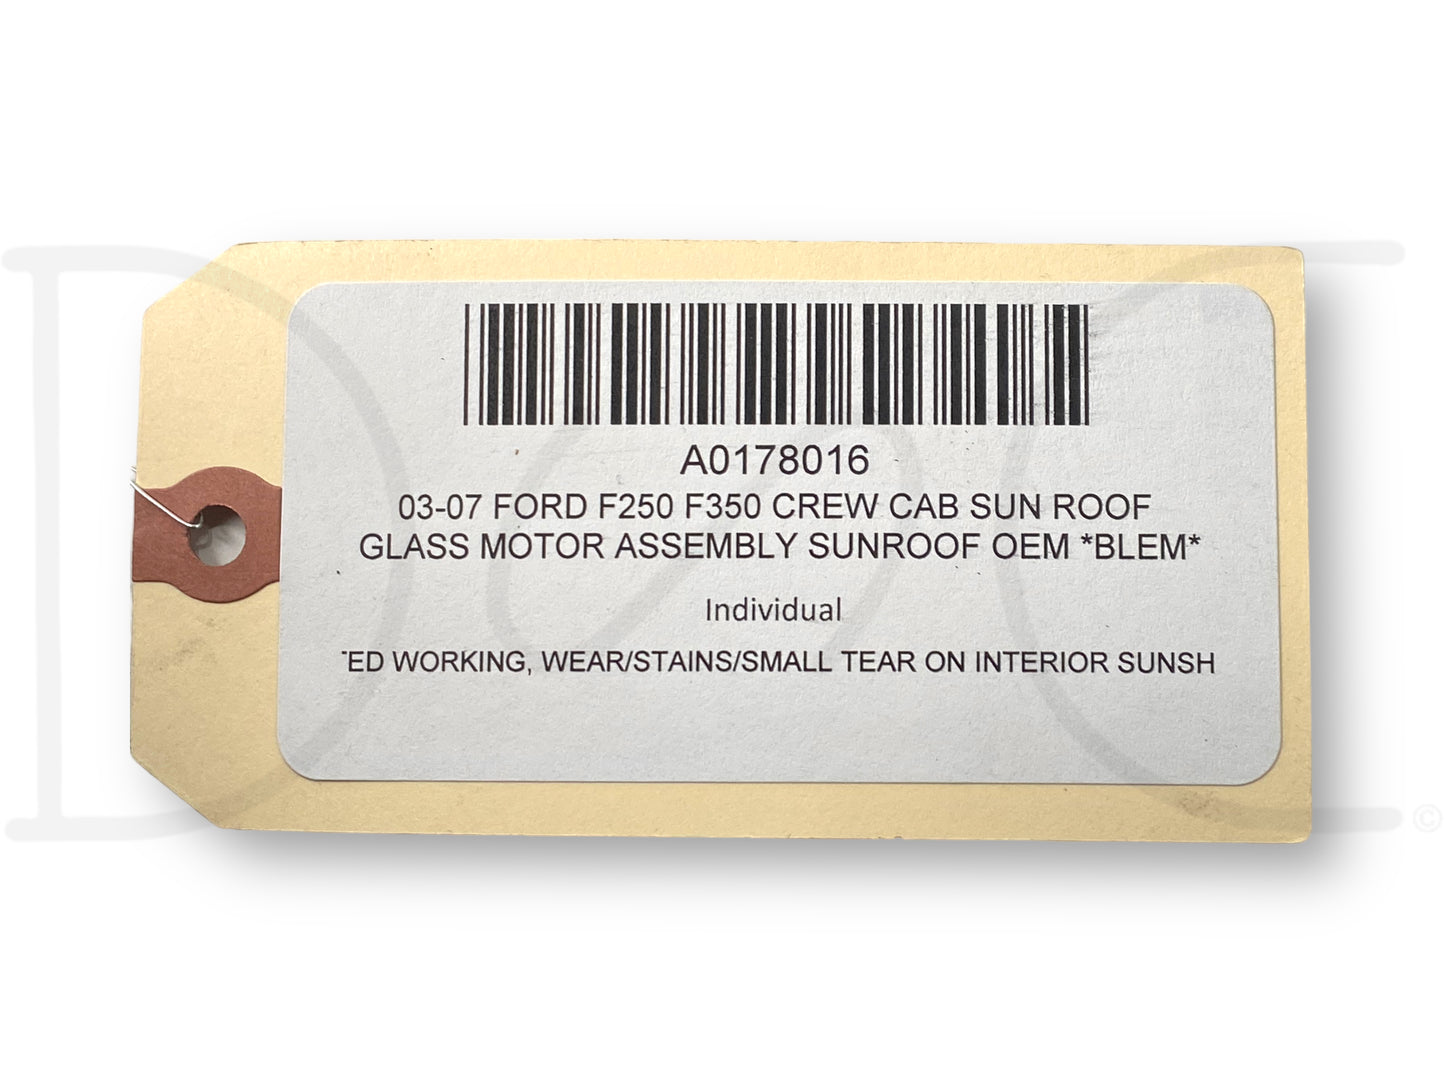 03-07 Ford F250 F350 Crew Cab Sun Roof Glass Motor Assembly Sunroof OEM *Blem*